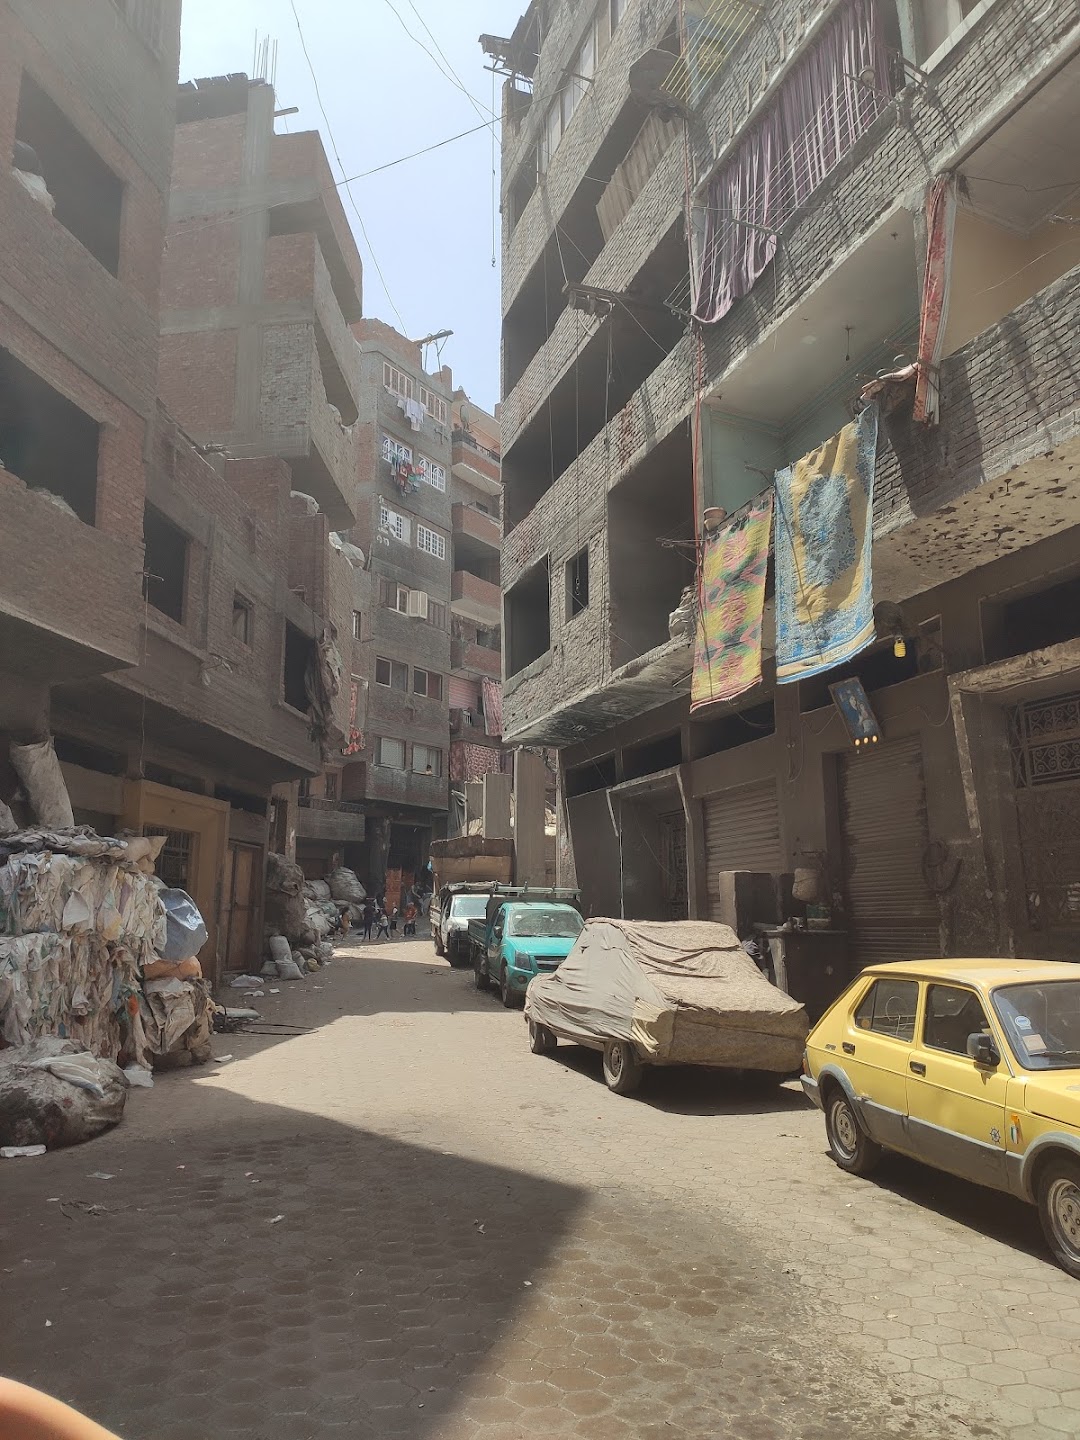 The Zabbaleen The Garbage People of Cairo